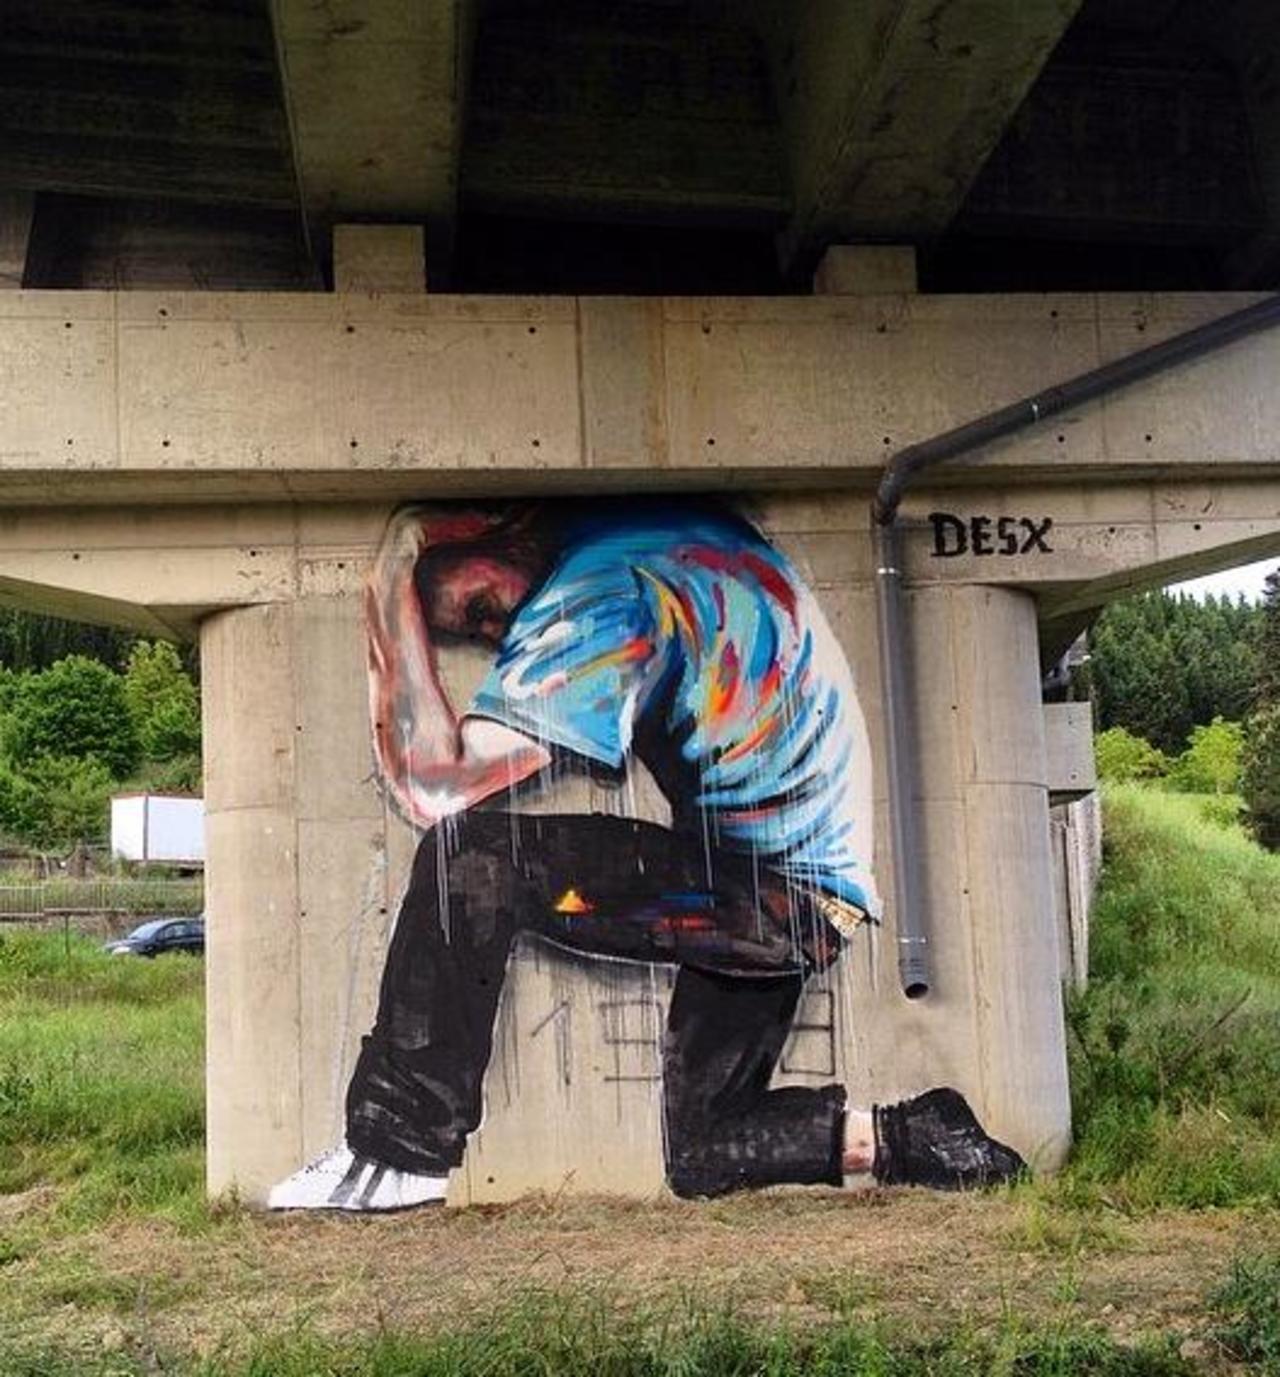 Brilliant placement in this Street Art piece by Desx 

#art #arte #graffiti #streetart http://t.co/VUgUF3G2ZL